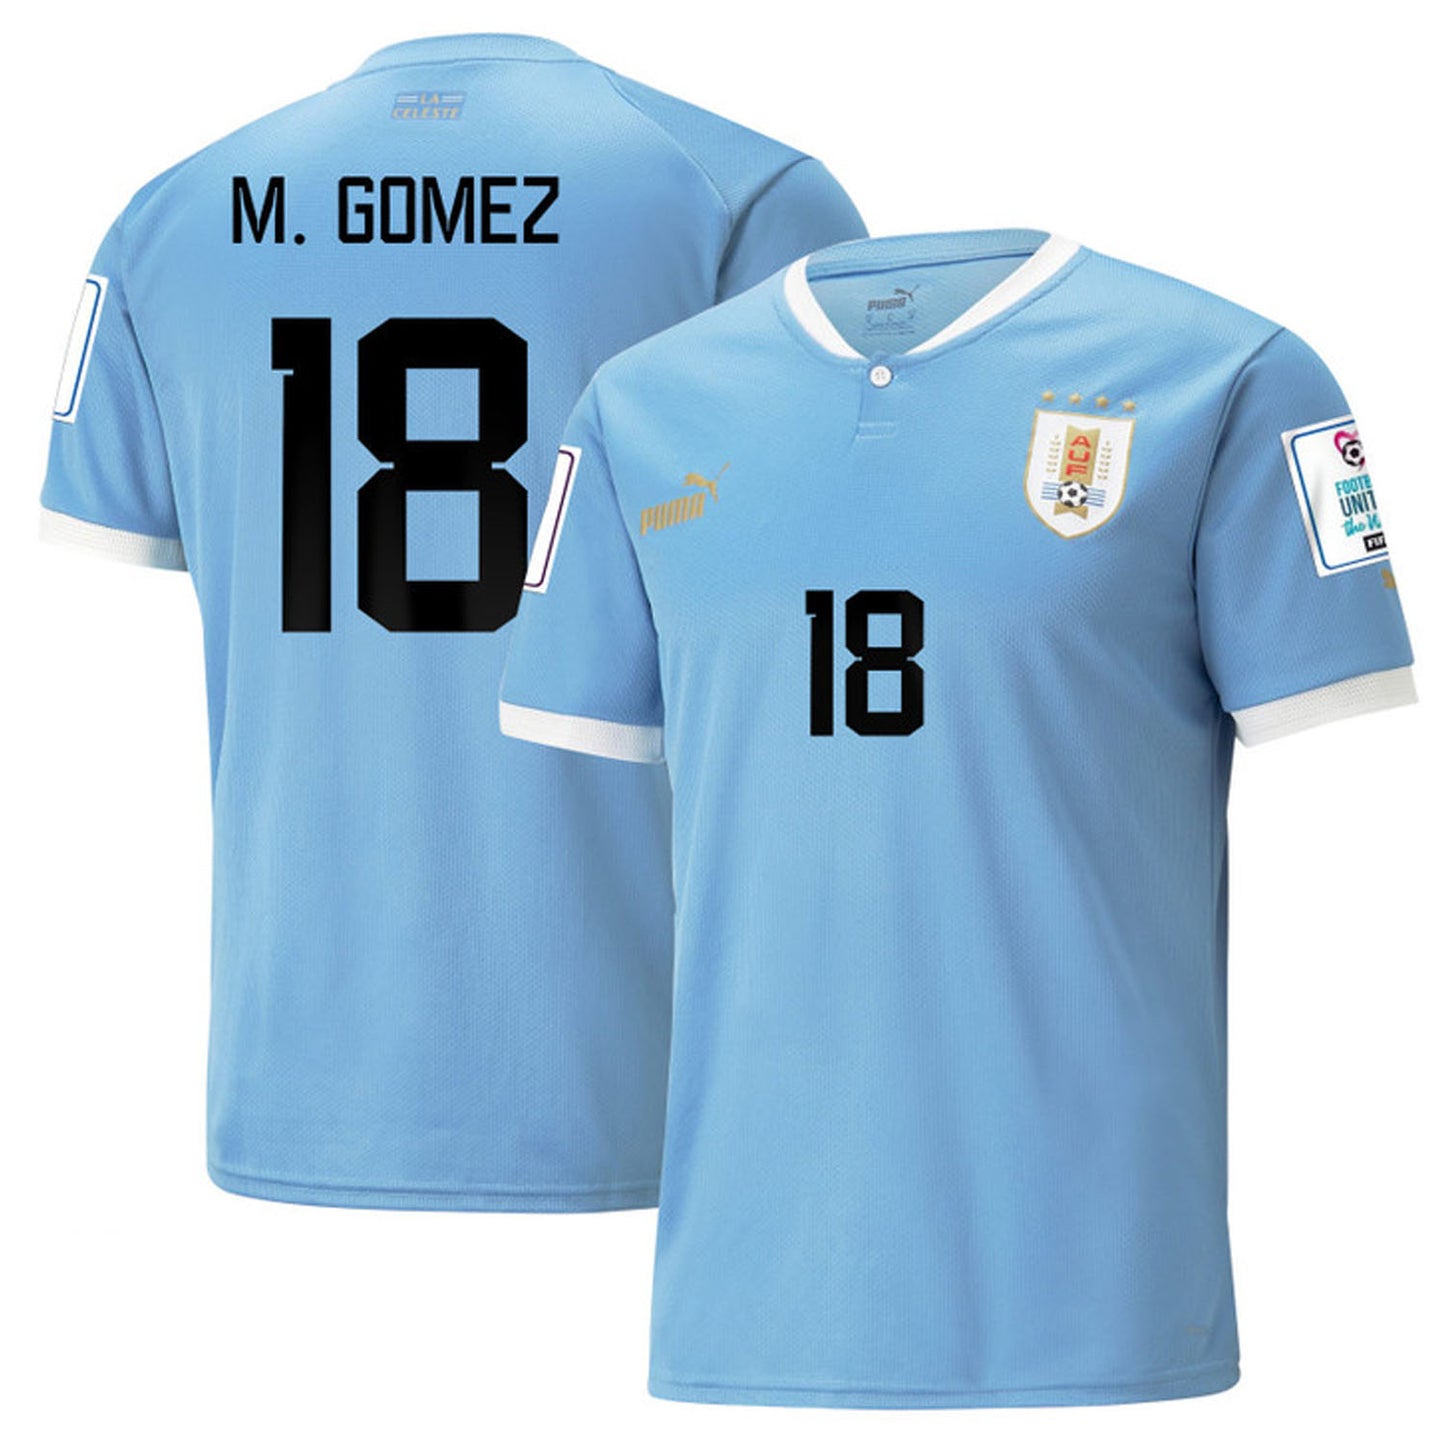 Maxi Gómez Uruguay 18 Fifa World Cup Jersey